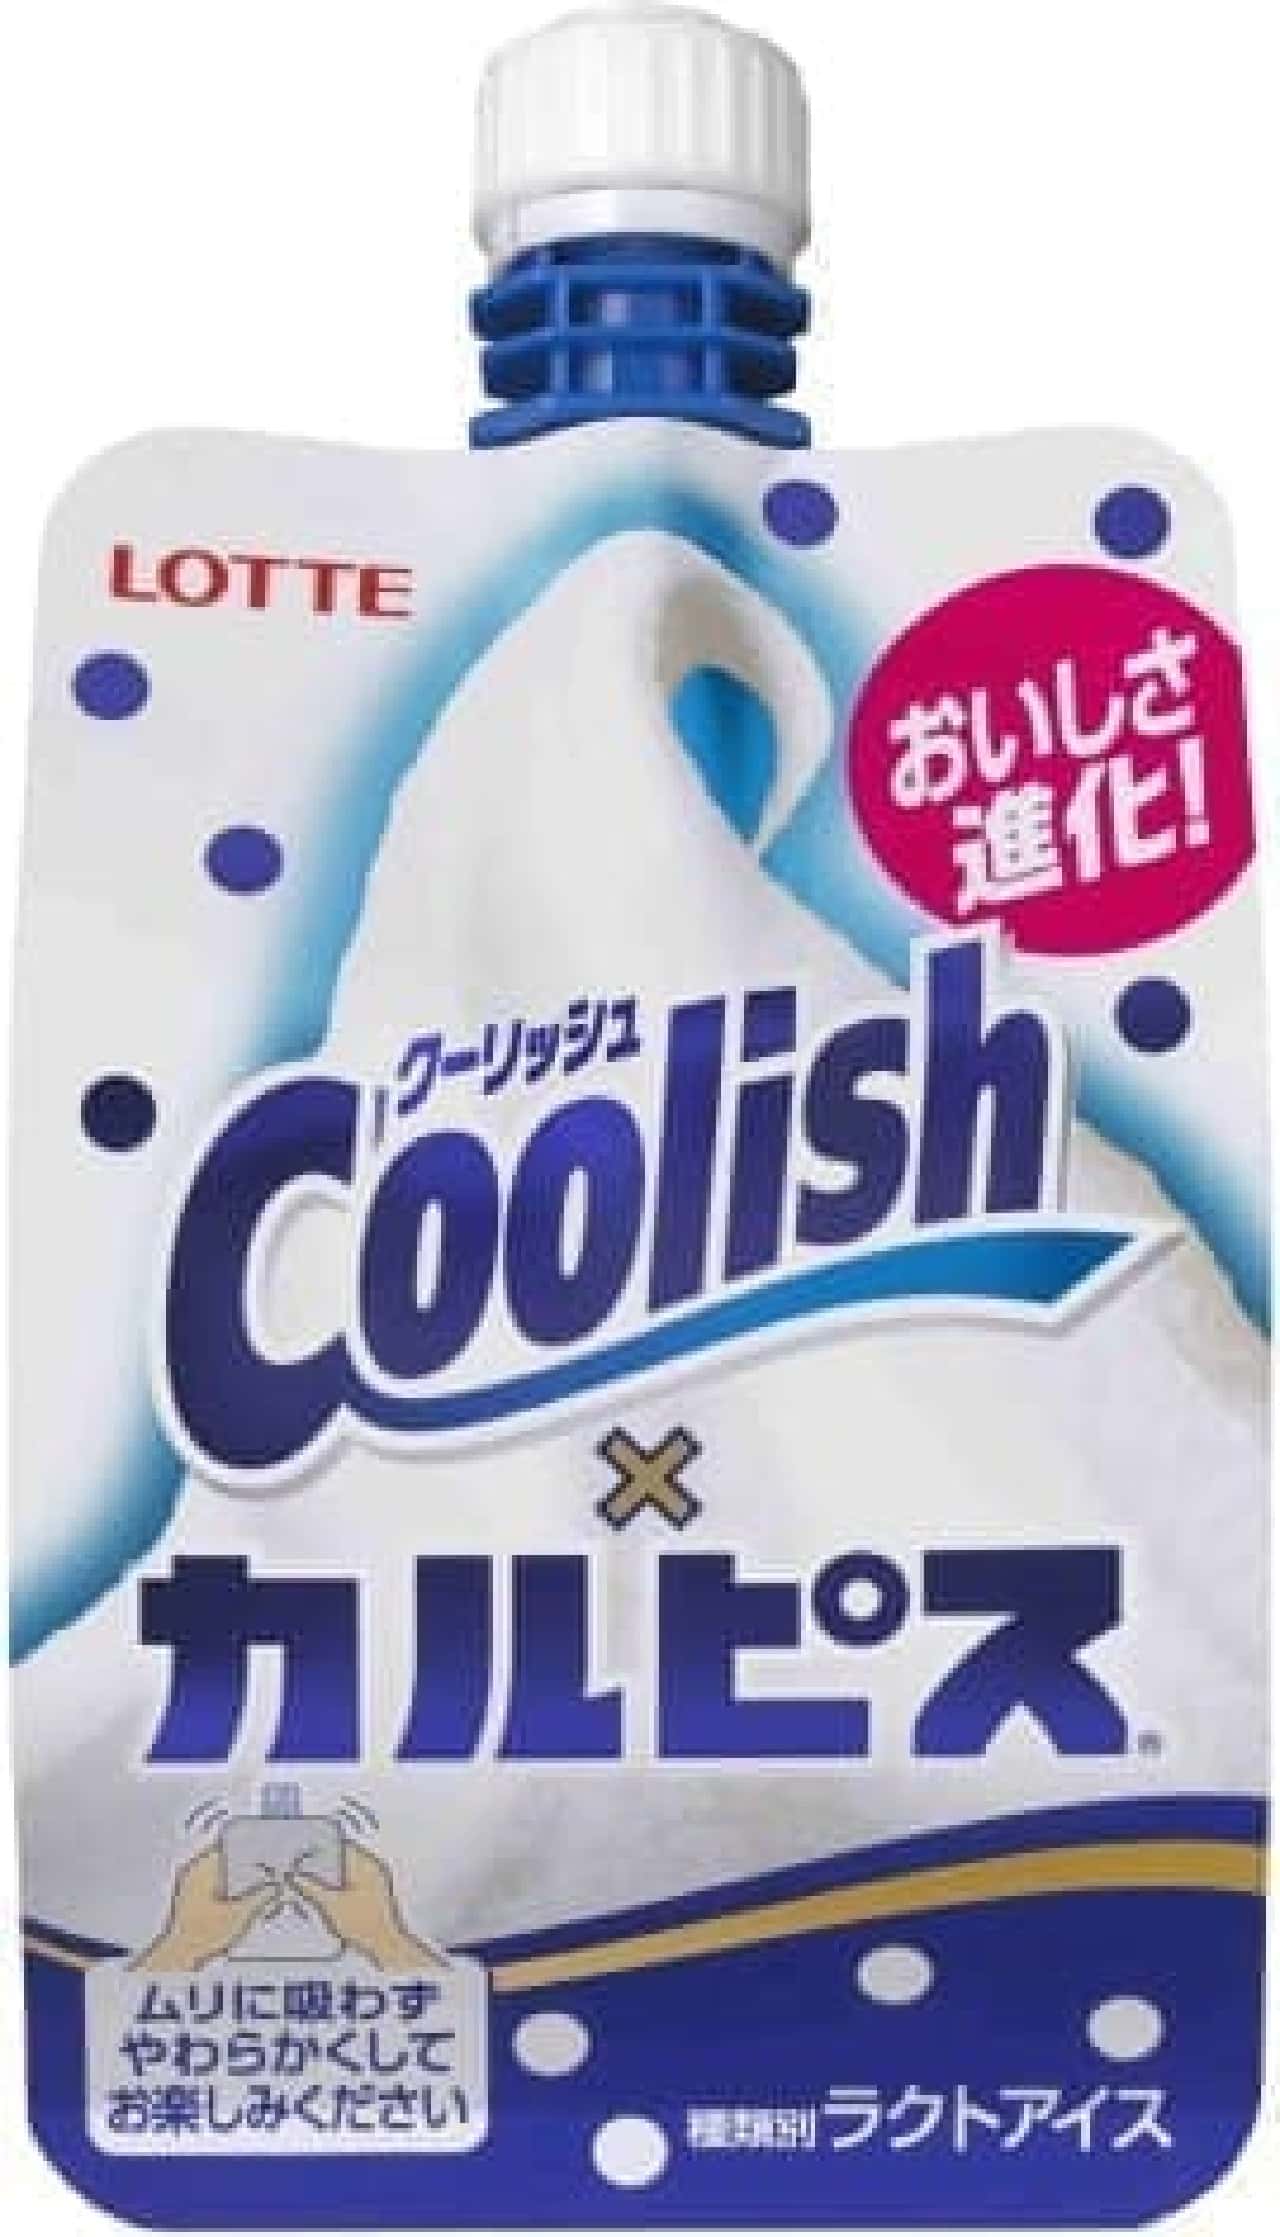 Lotte Ice "Coolish x Calpis"